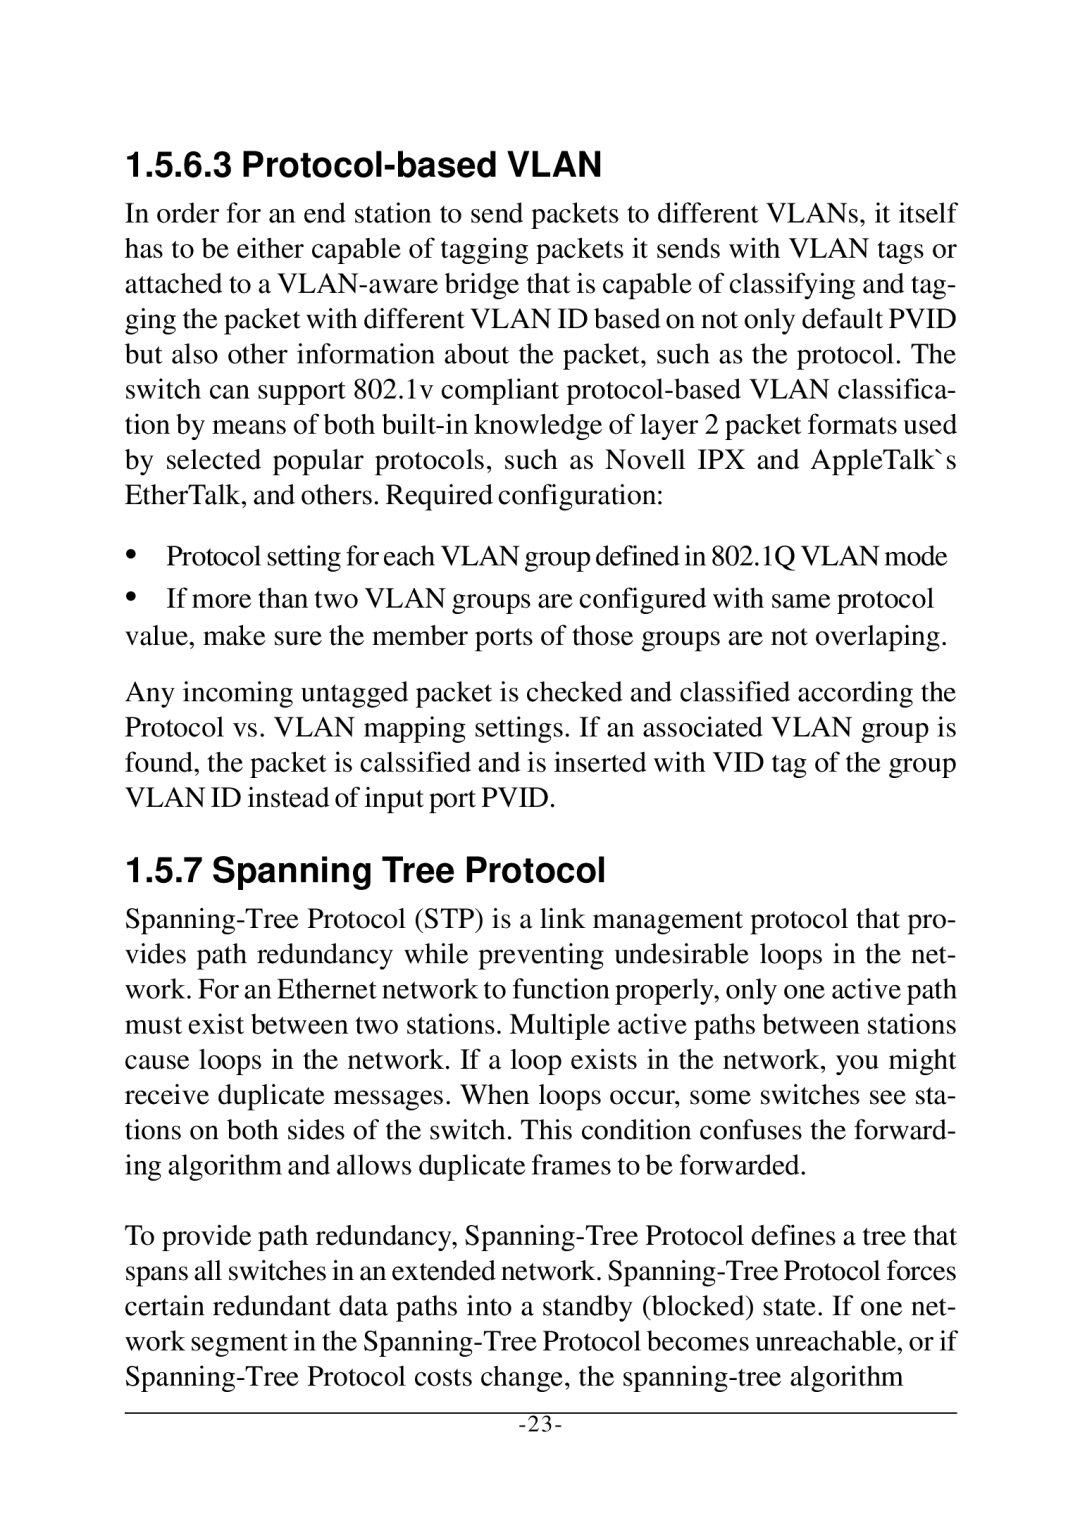 KTI Networks KS-2260 operation manual Protocol-based Vlan, Spanning Tree Protocol 